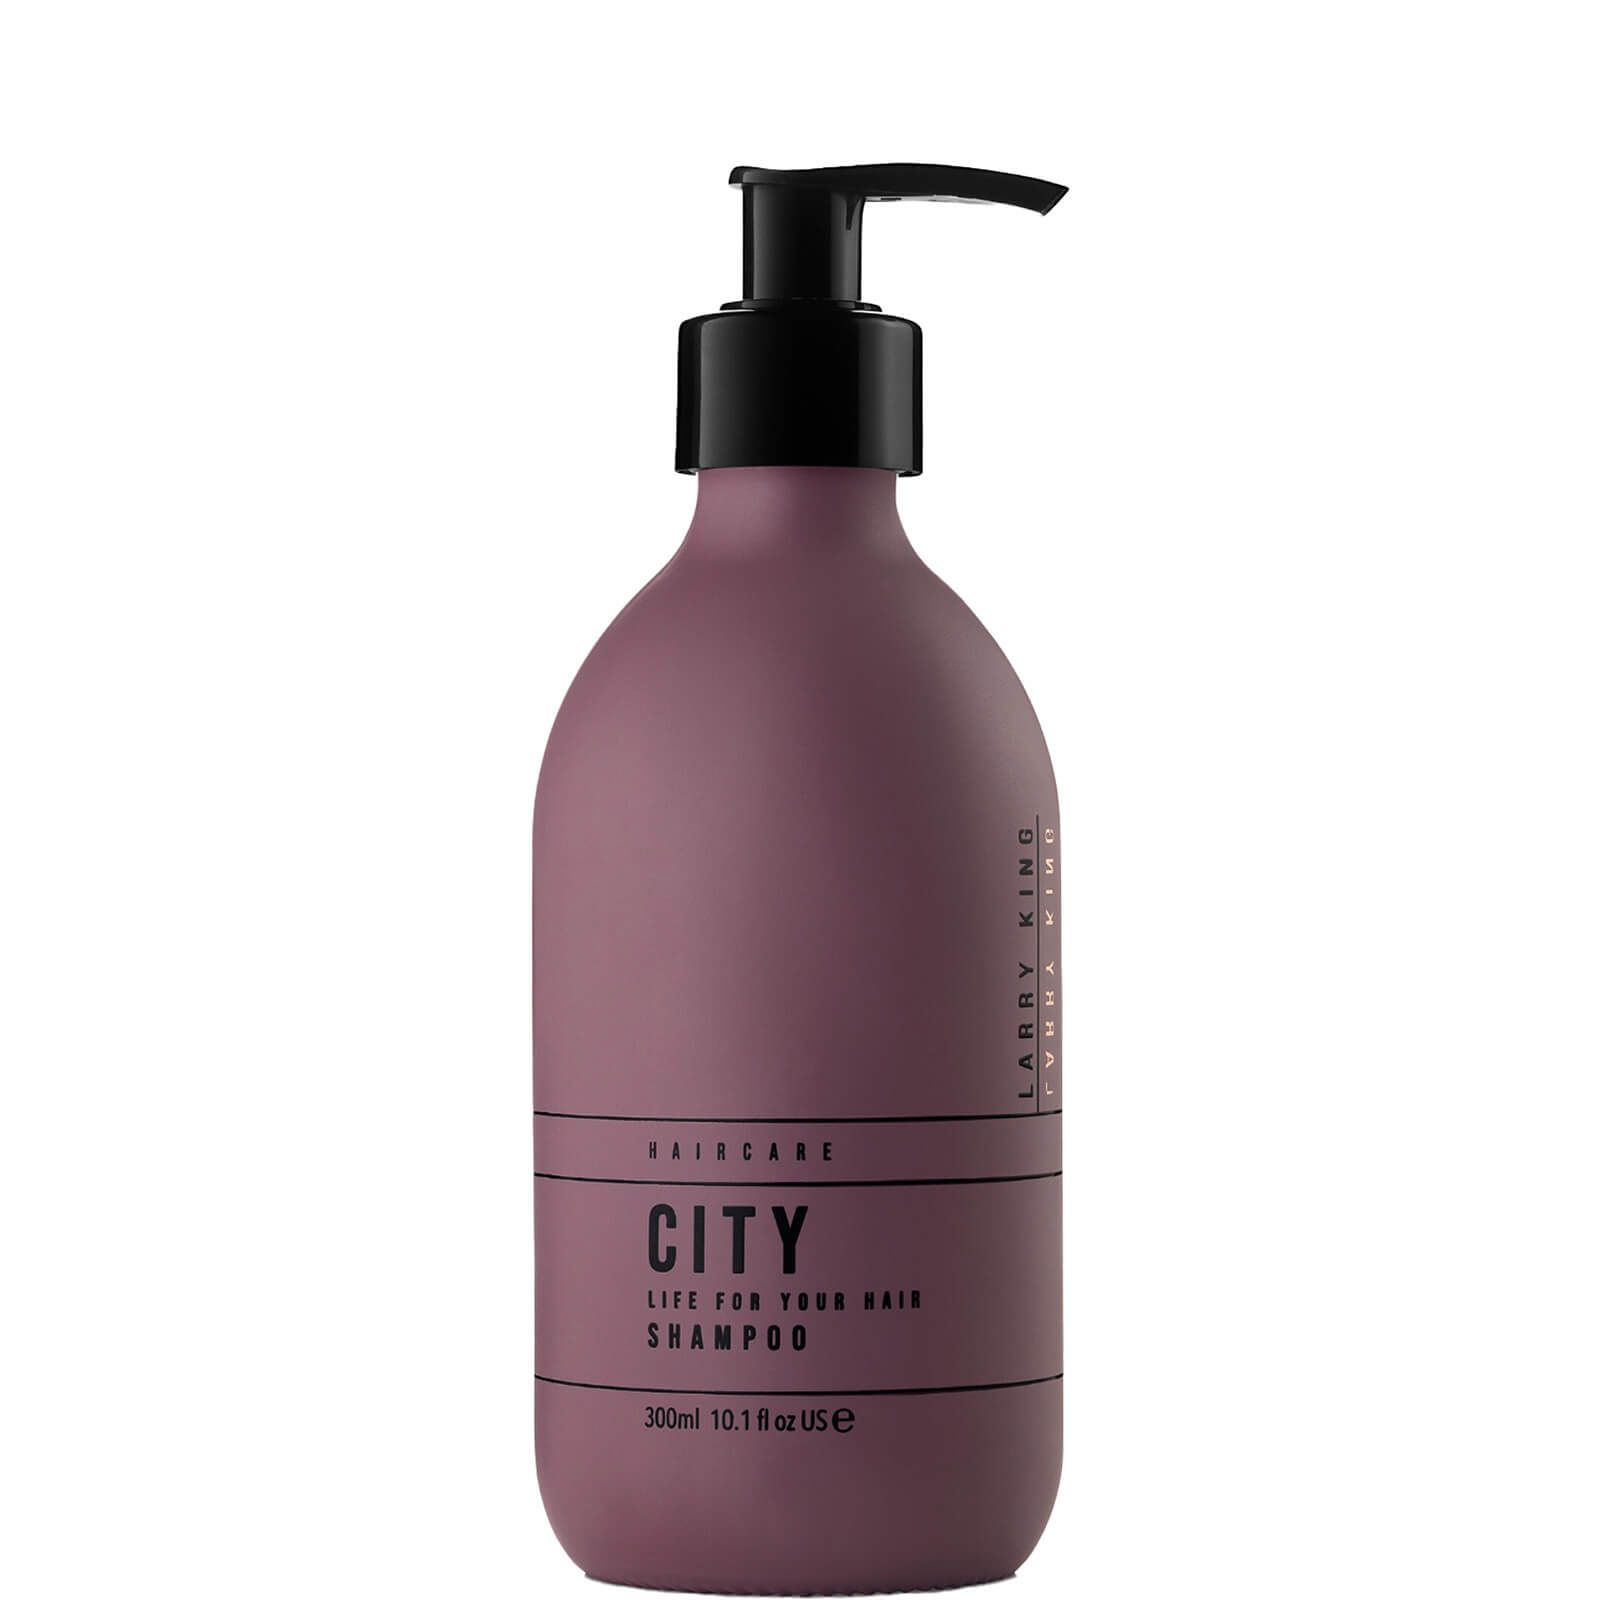 Larry King Hair Care City Life Shampoo - 300ml | Cult Beauty (Global)